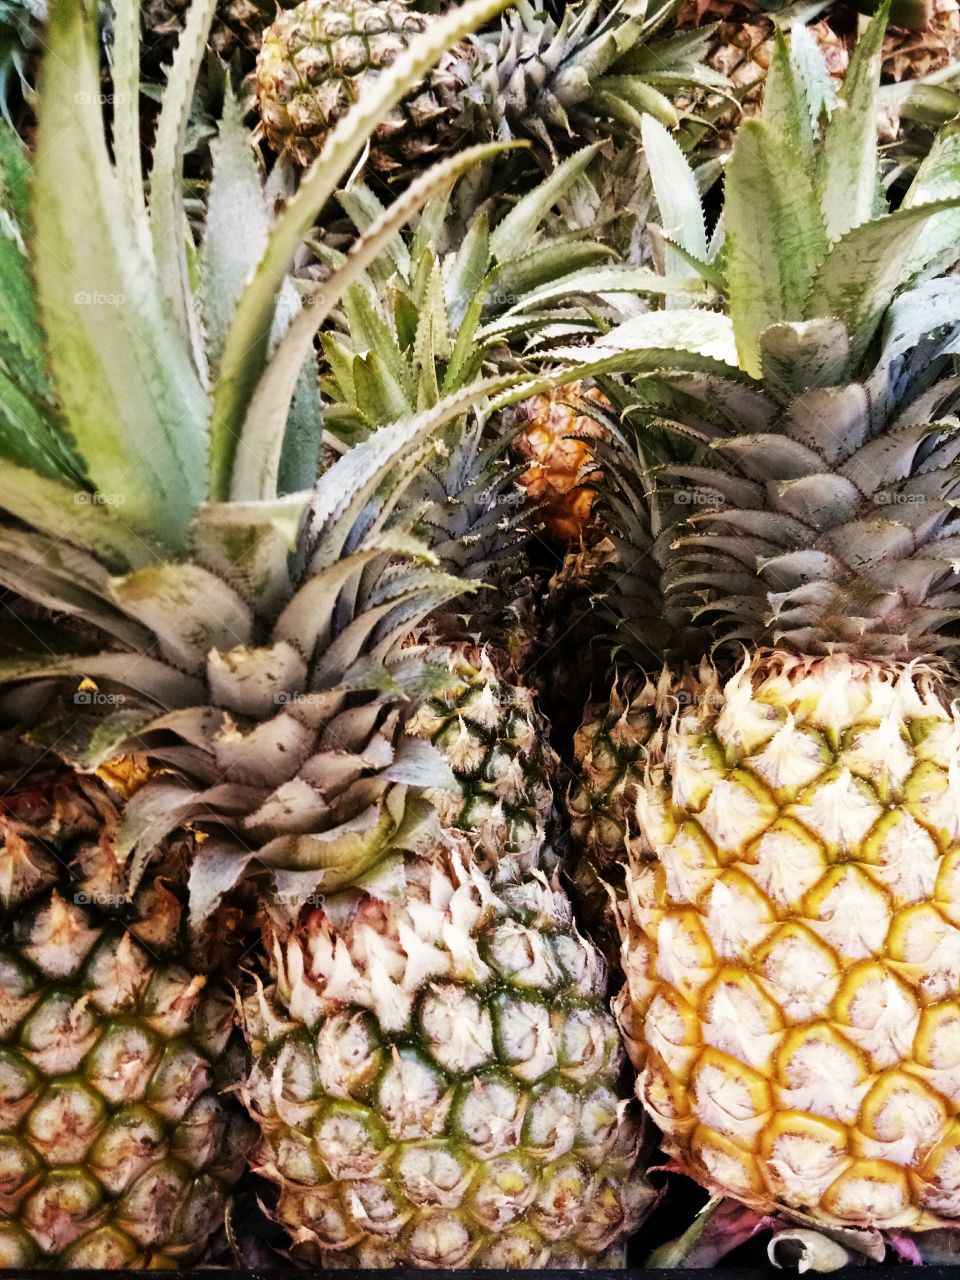 pineapple
fruit